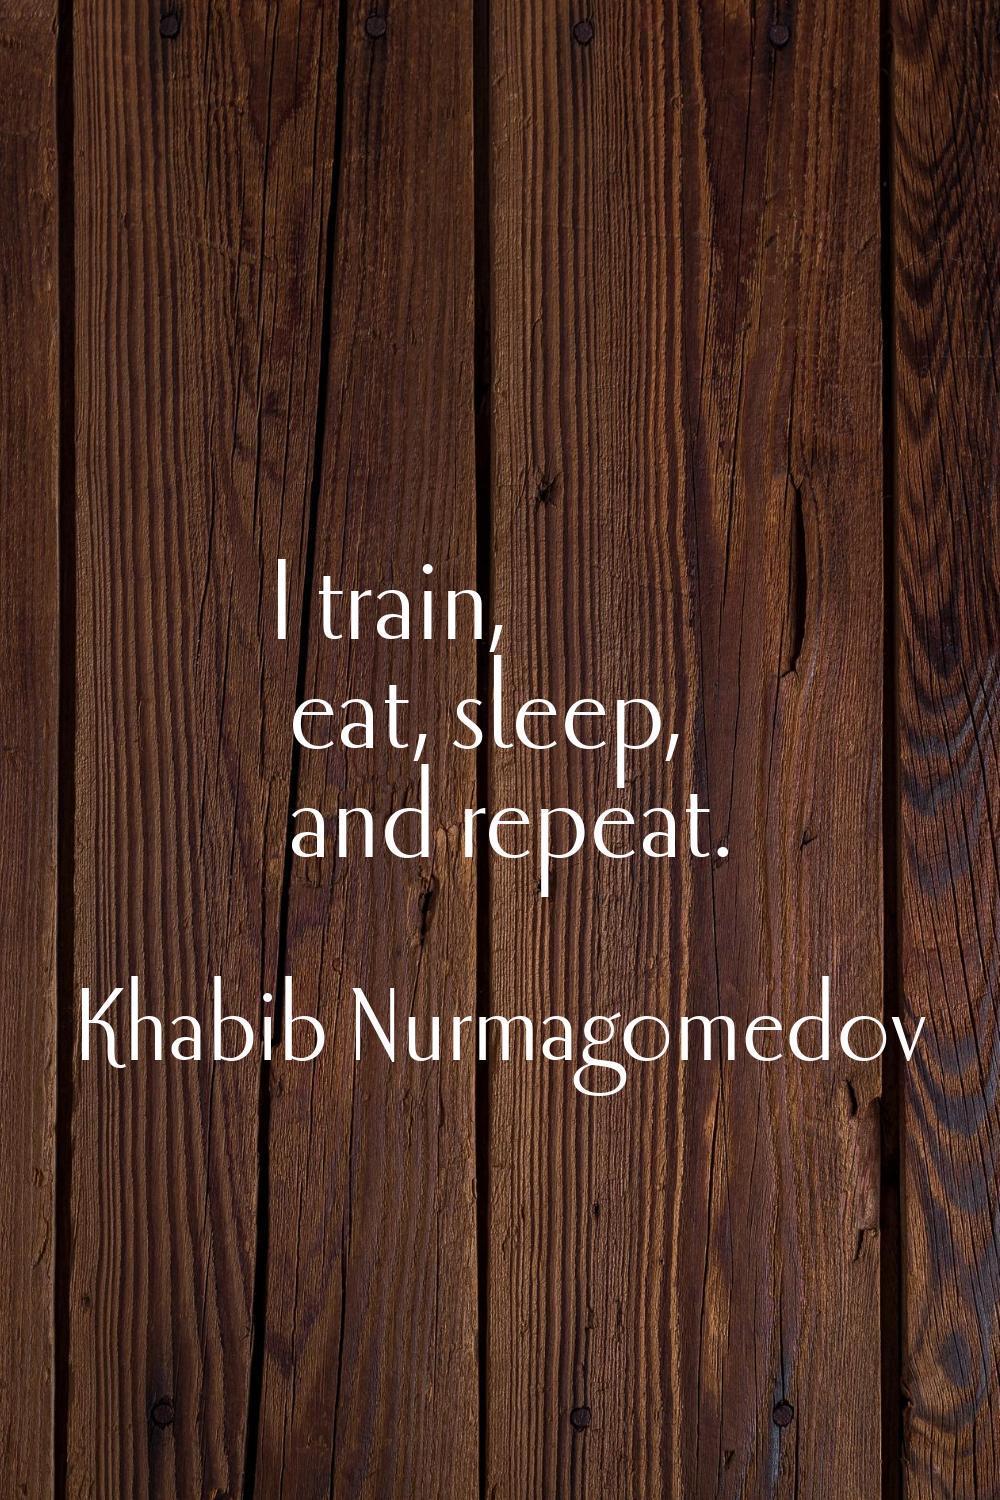 I train, eat, sleep, and repeat.